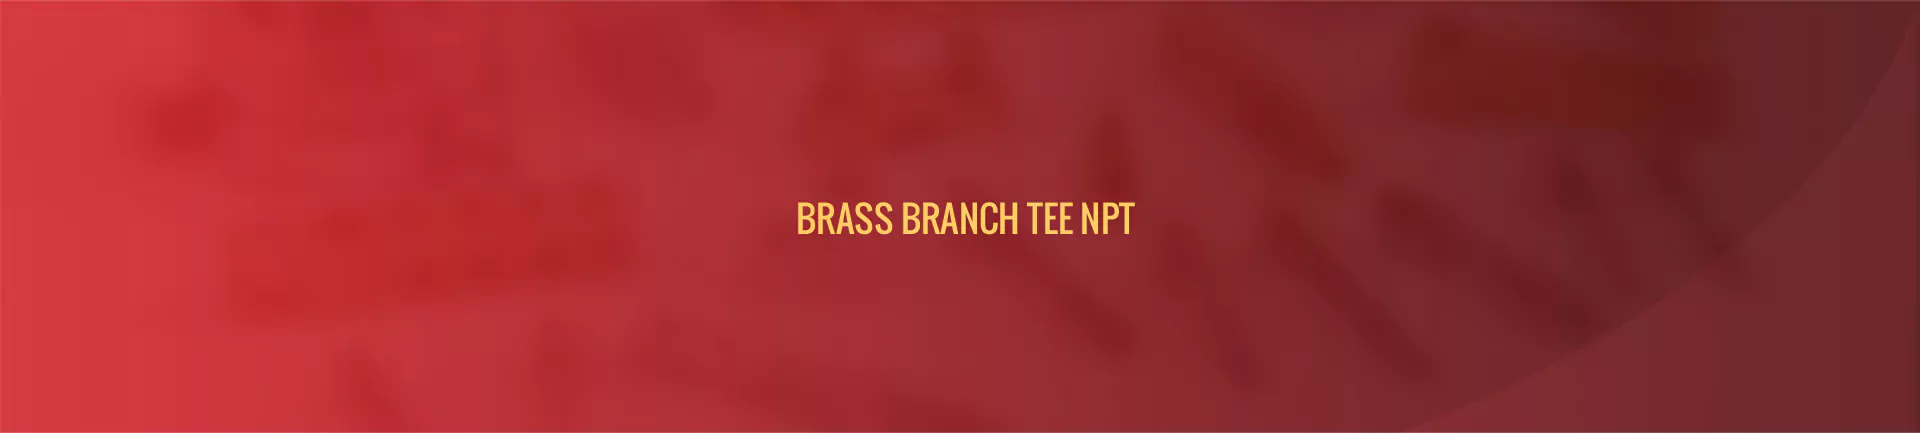 brass-branch-tee-npt-banner